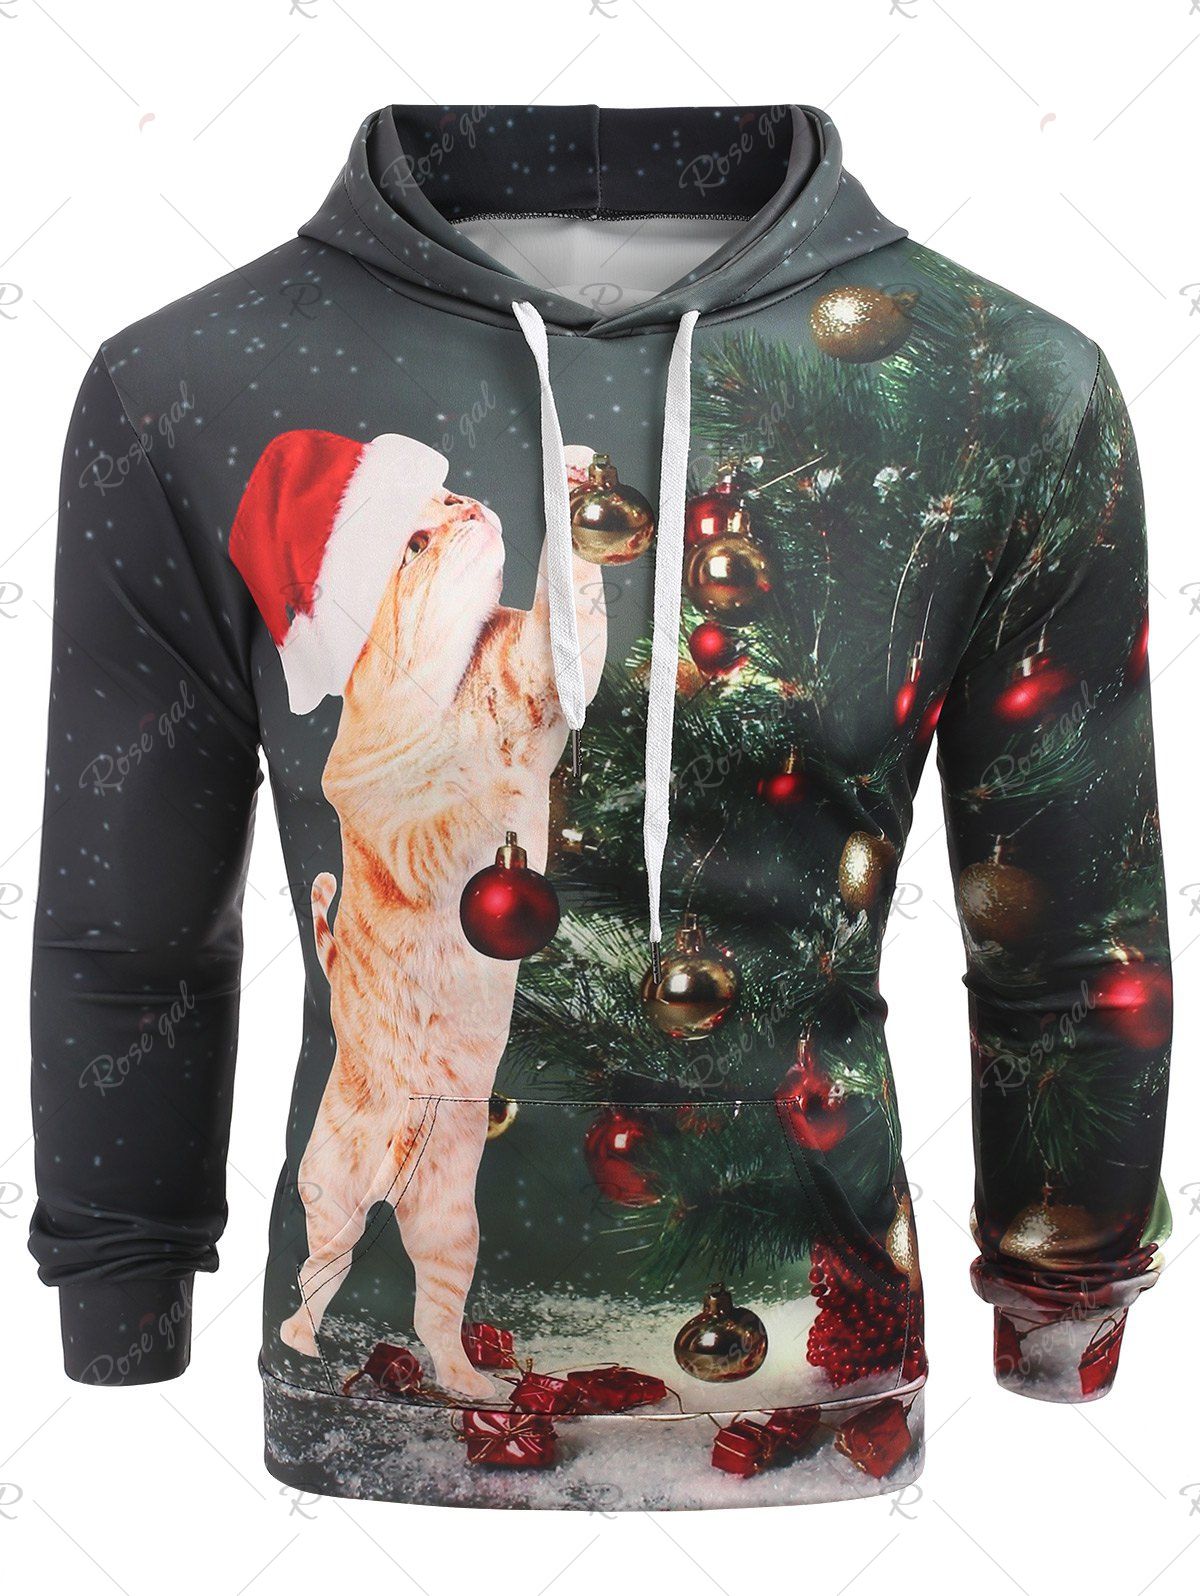 https://www.rosegal.com/mens-hoodies-sweatshirts/christmas-tree-cat-print-drawstring-hoodie-4252302.html?lkid=16127505